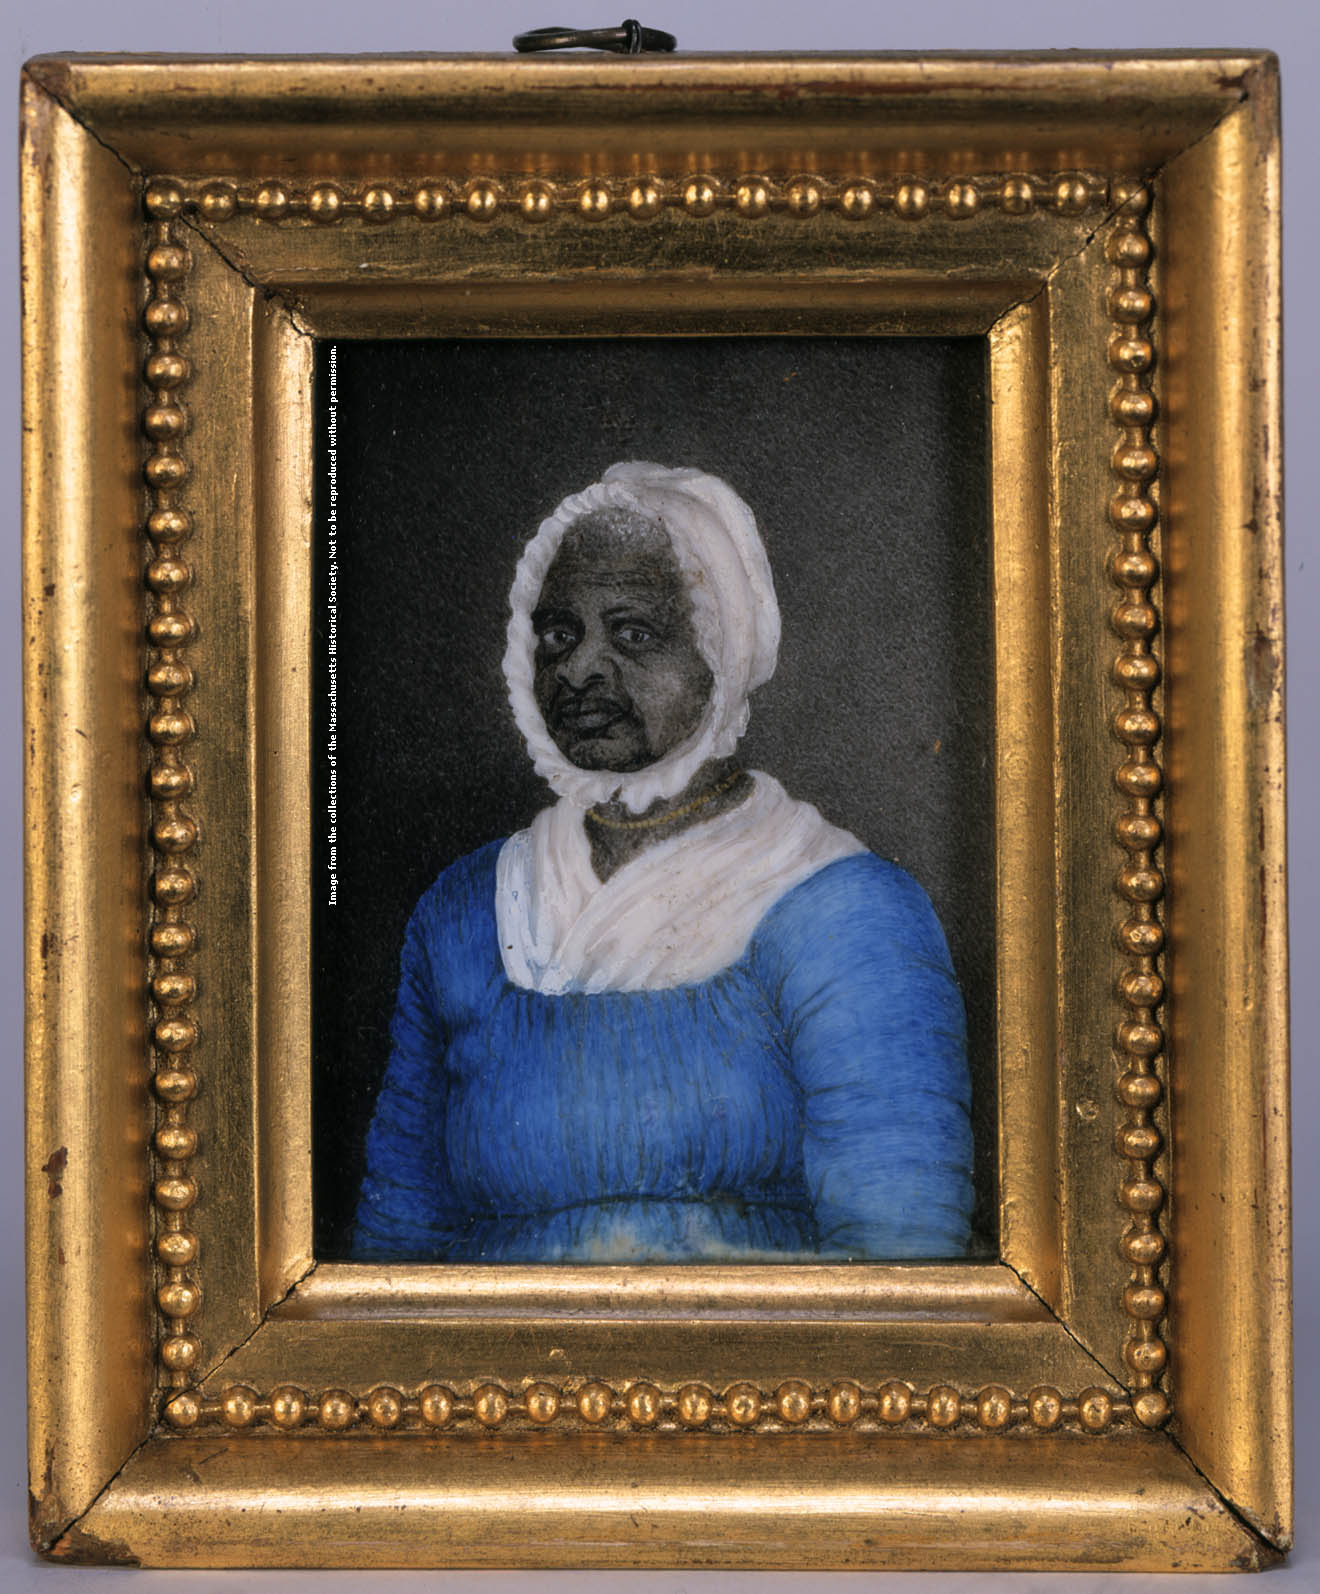 Painted portrait of Elizabeth "Mumbet" Freeman